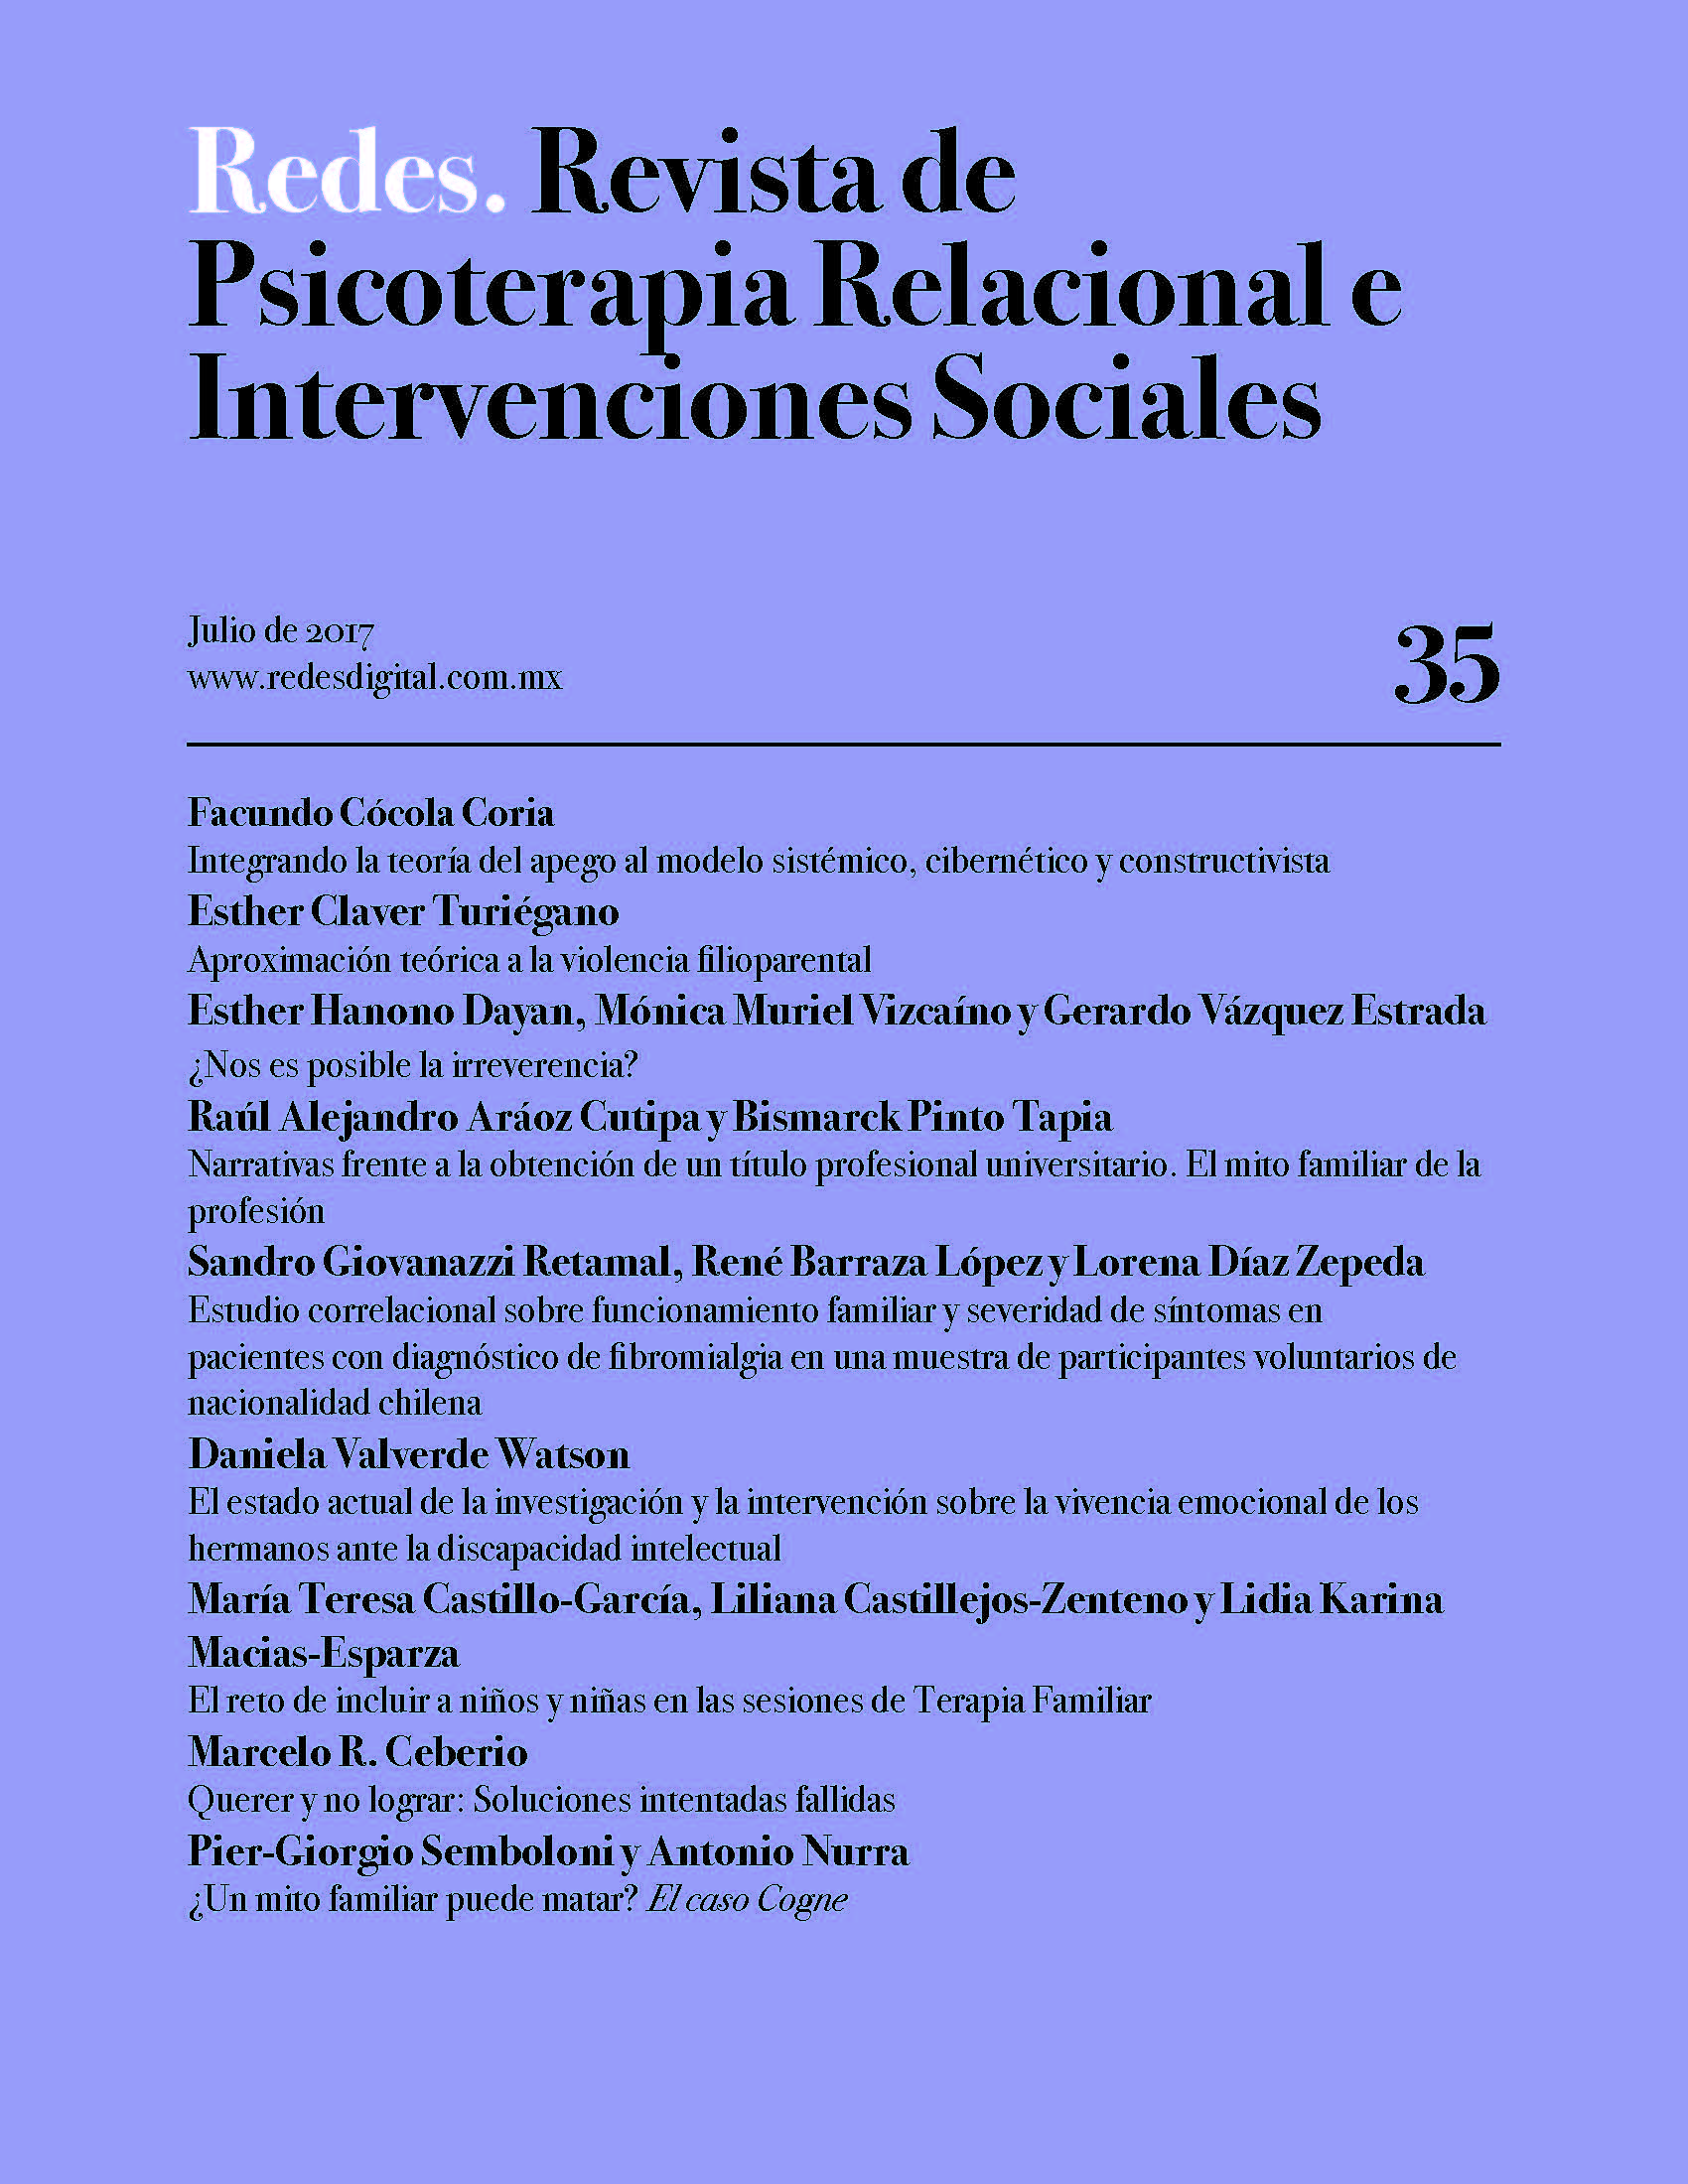 					Ver Núm. 35 (2017): Redes. Revista de Psicoterapia Relacional e Intervenciones Sociales. Julio, 2017
				